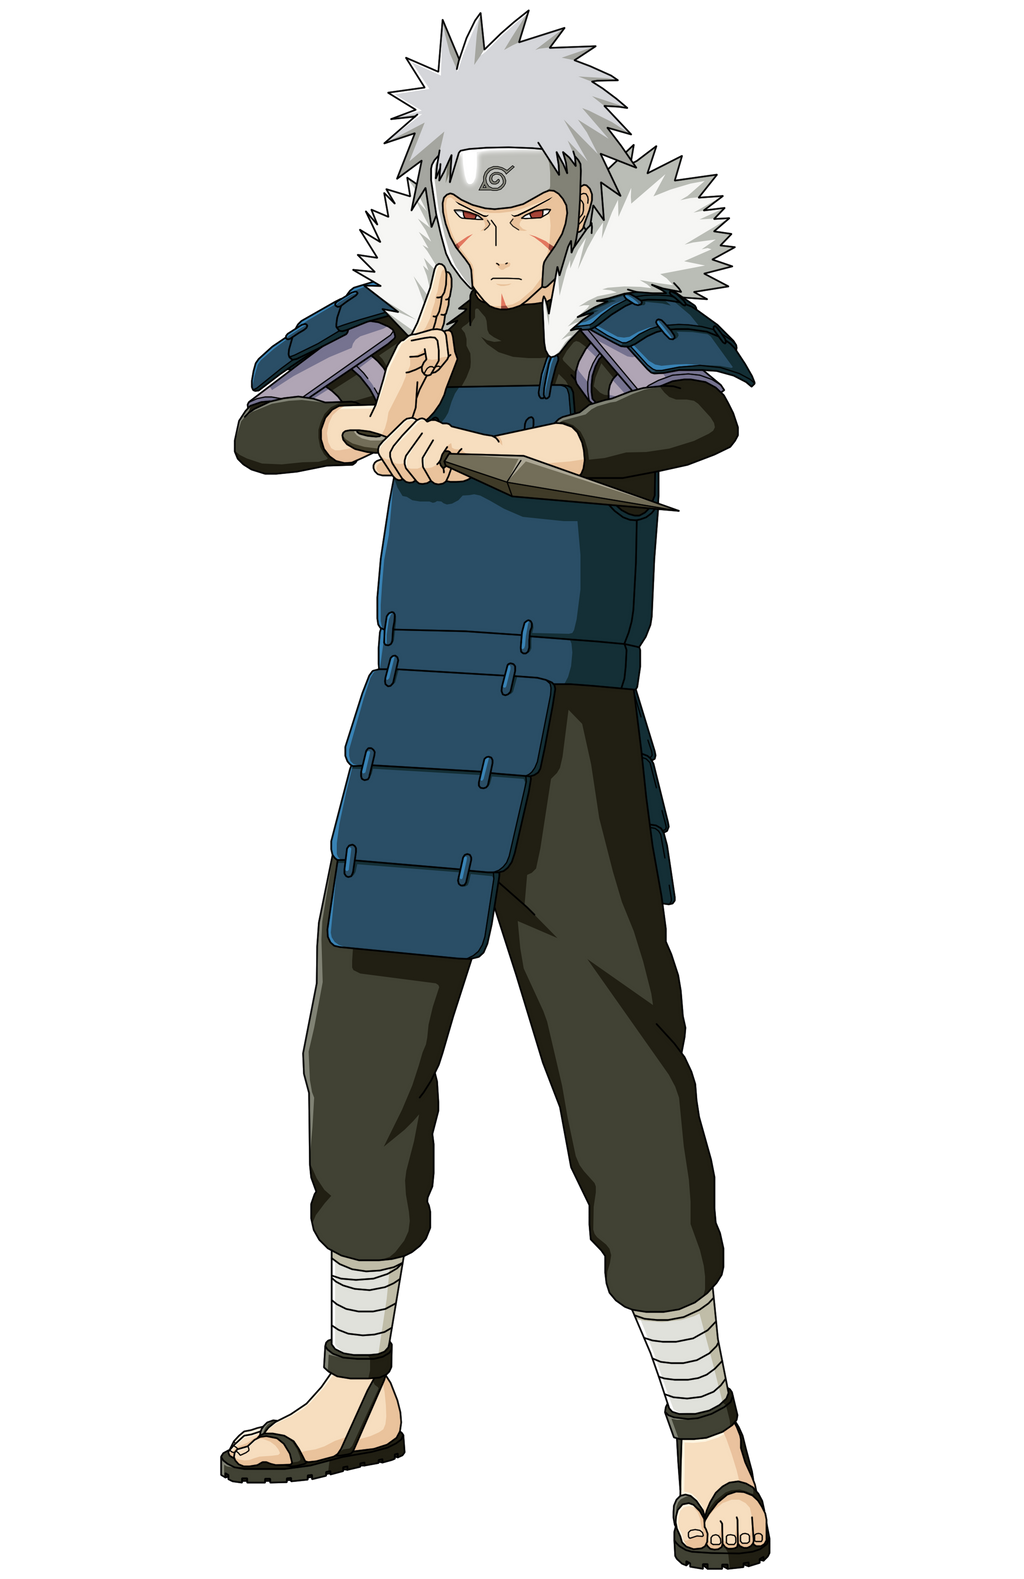 Image of Tobirama Senju from Naruto anime